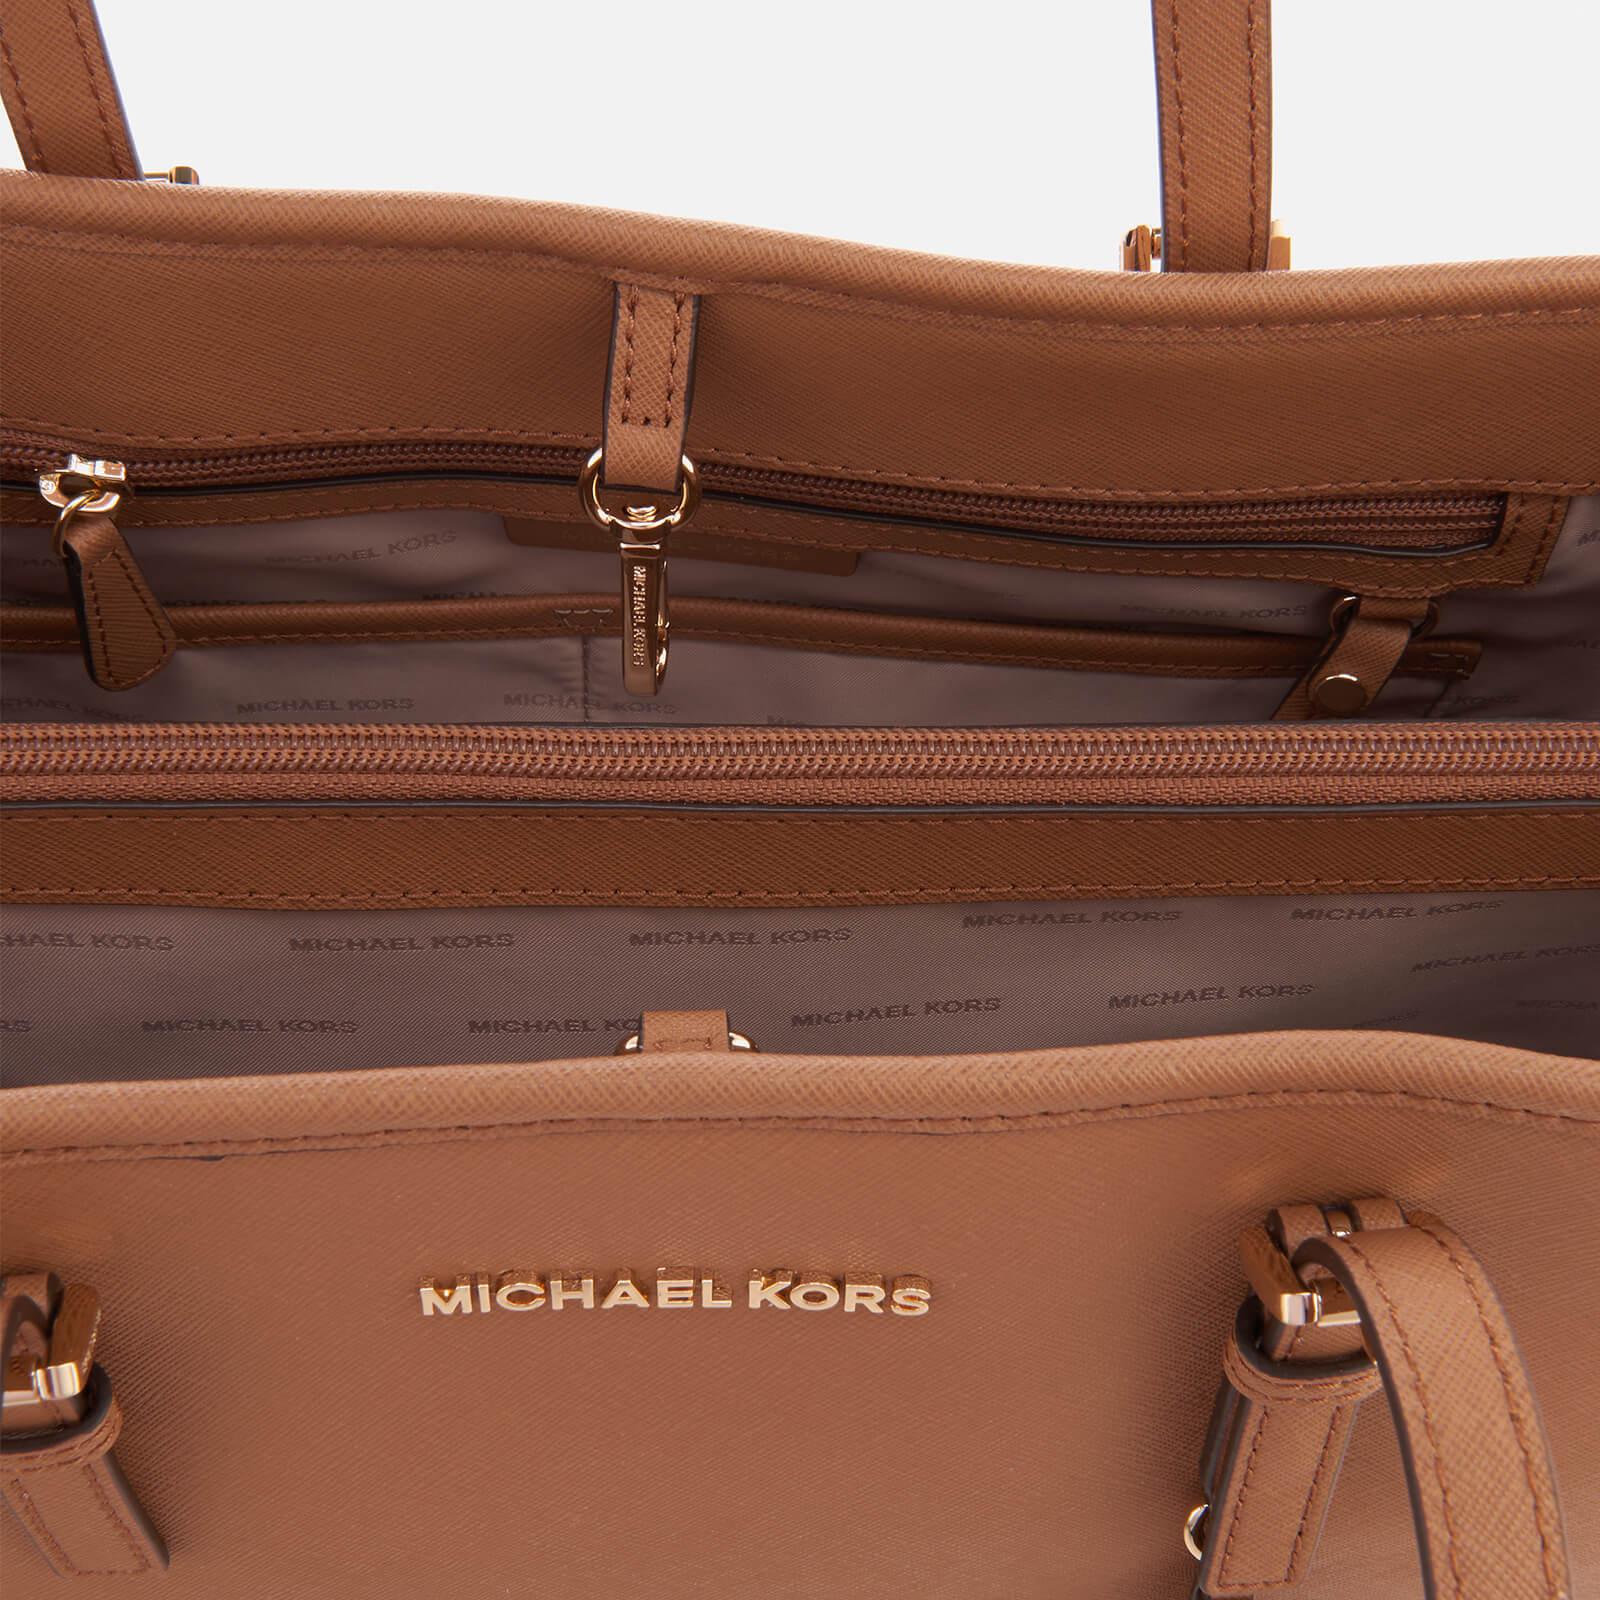 Michael Kors Jet Set Travel Large Tote Bag